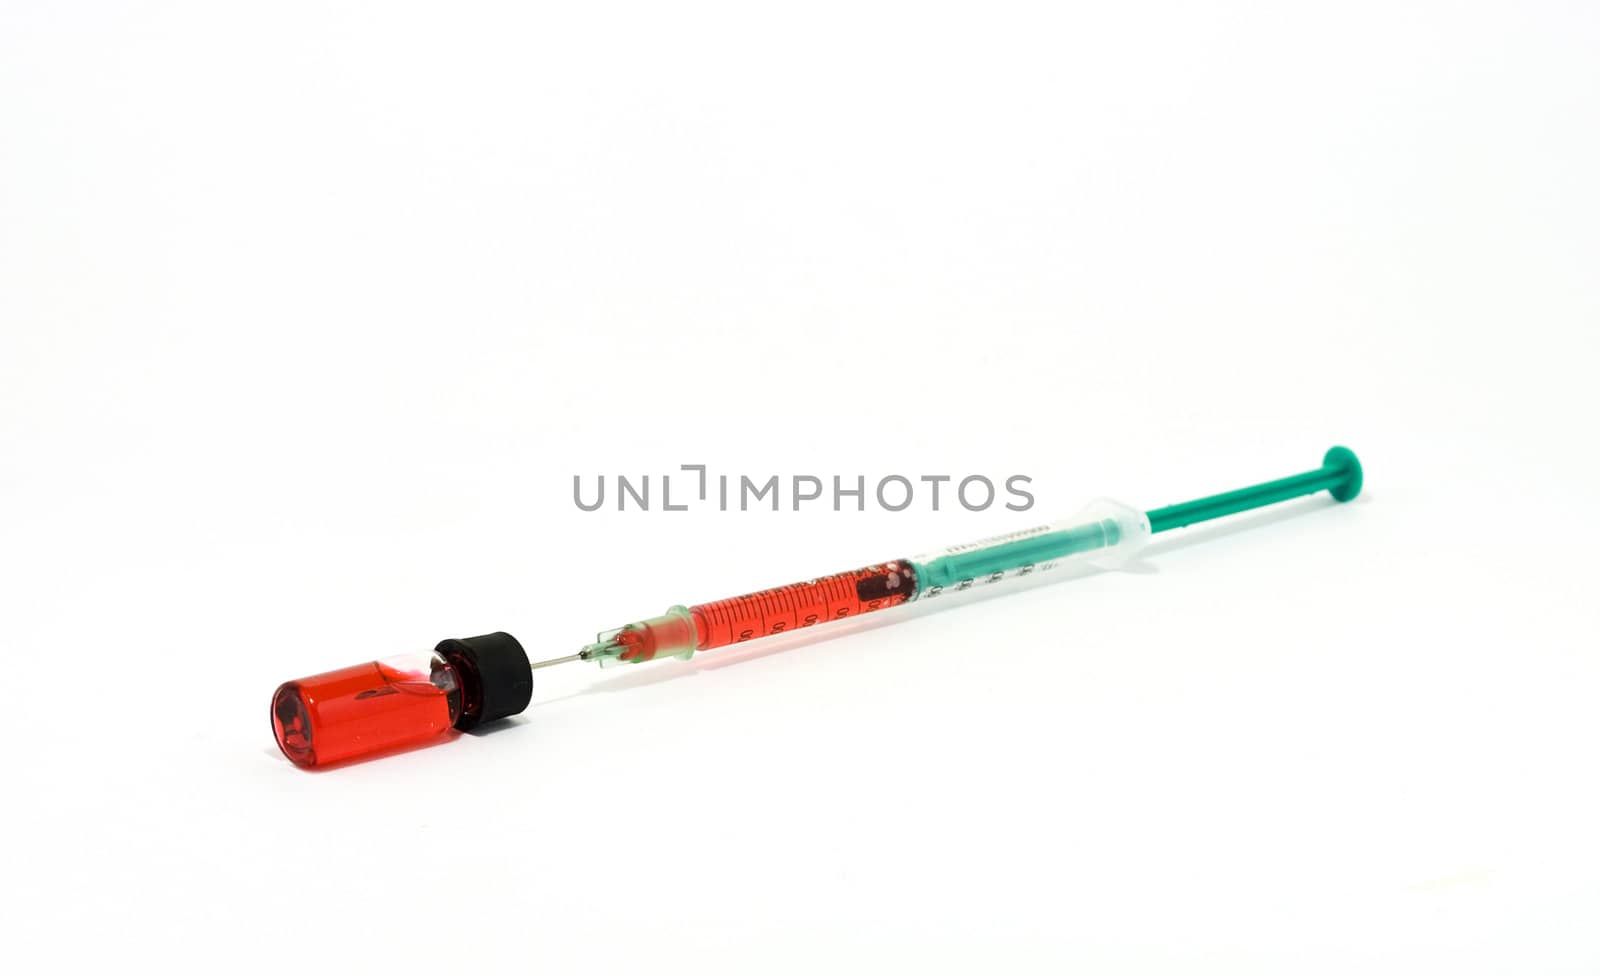 Syringe and vial by ursolv